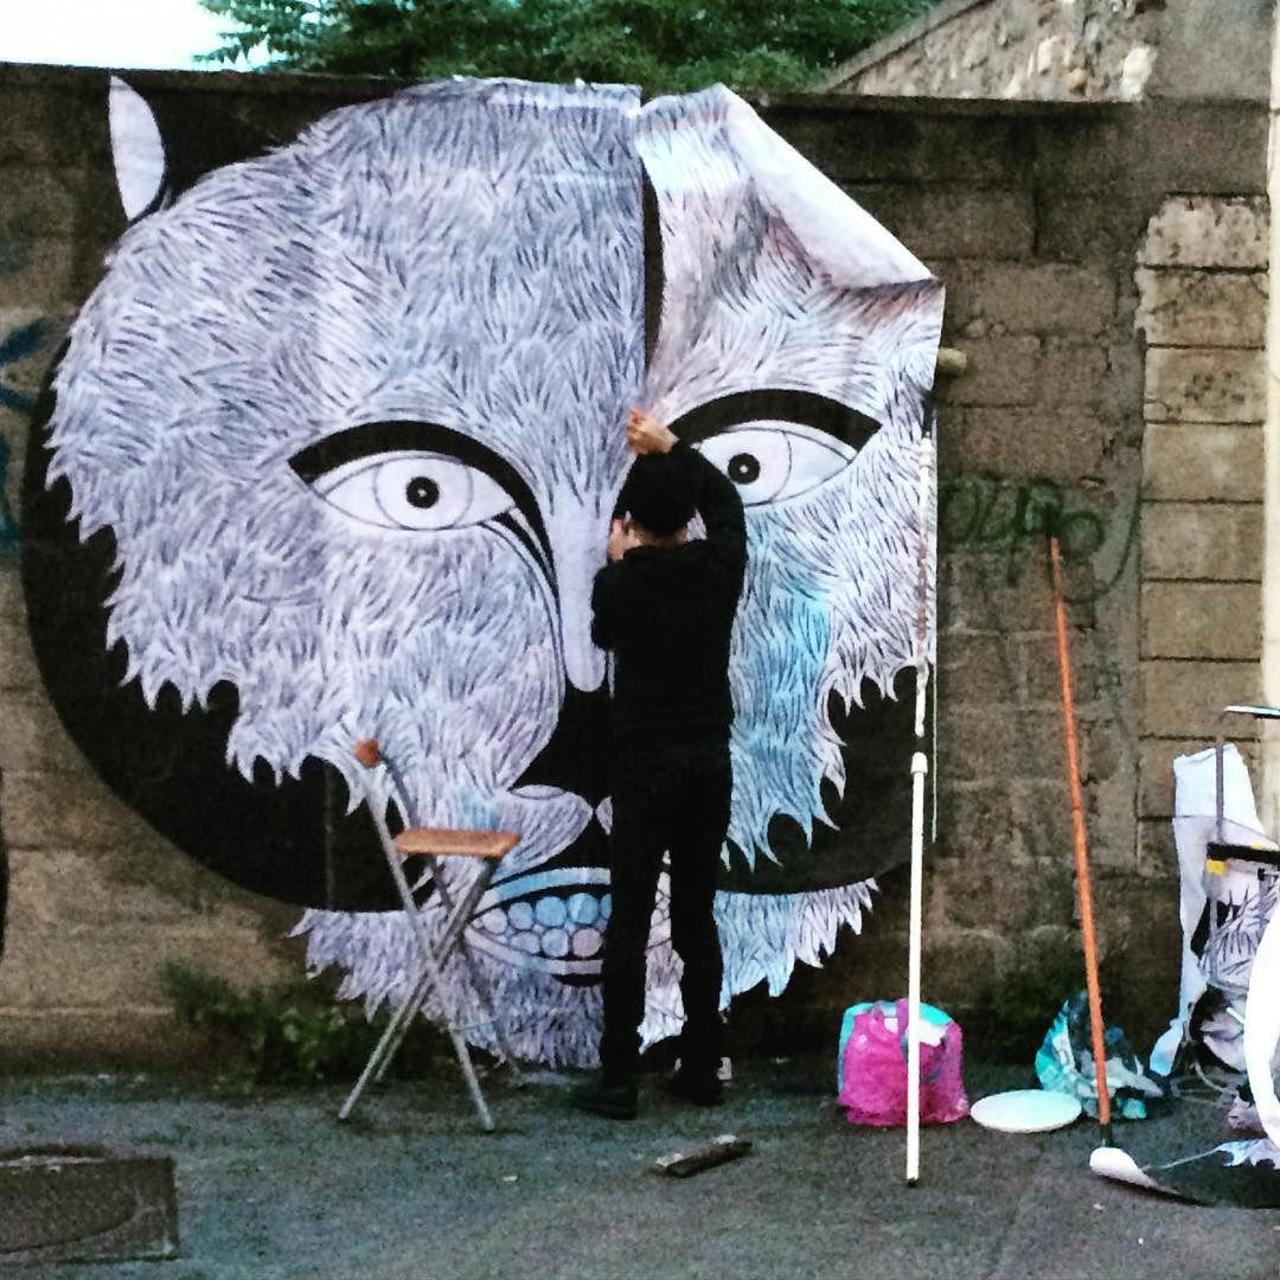 #Paris #graffiti photo by @elricoelmagnifico http://ift.tt/1LHVDEn #StreetArt http://t.co/PzgrliPjfh